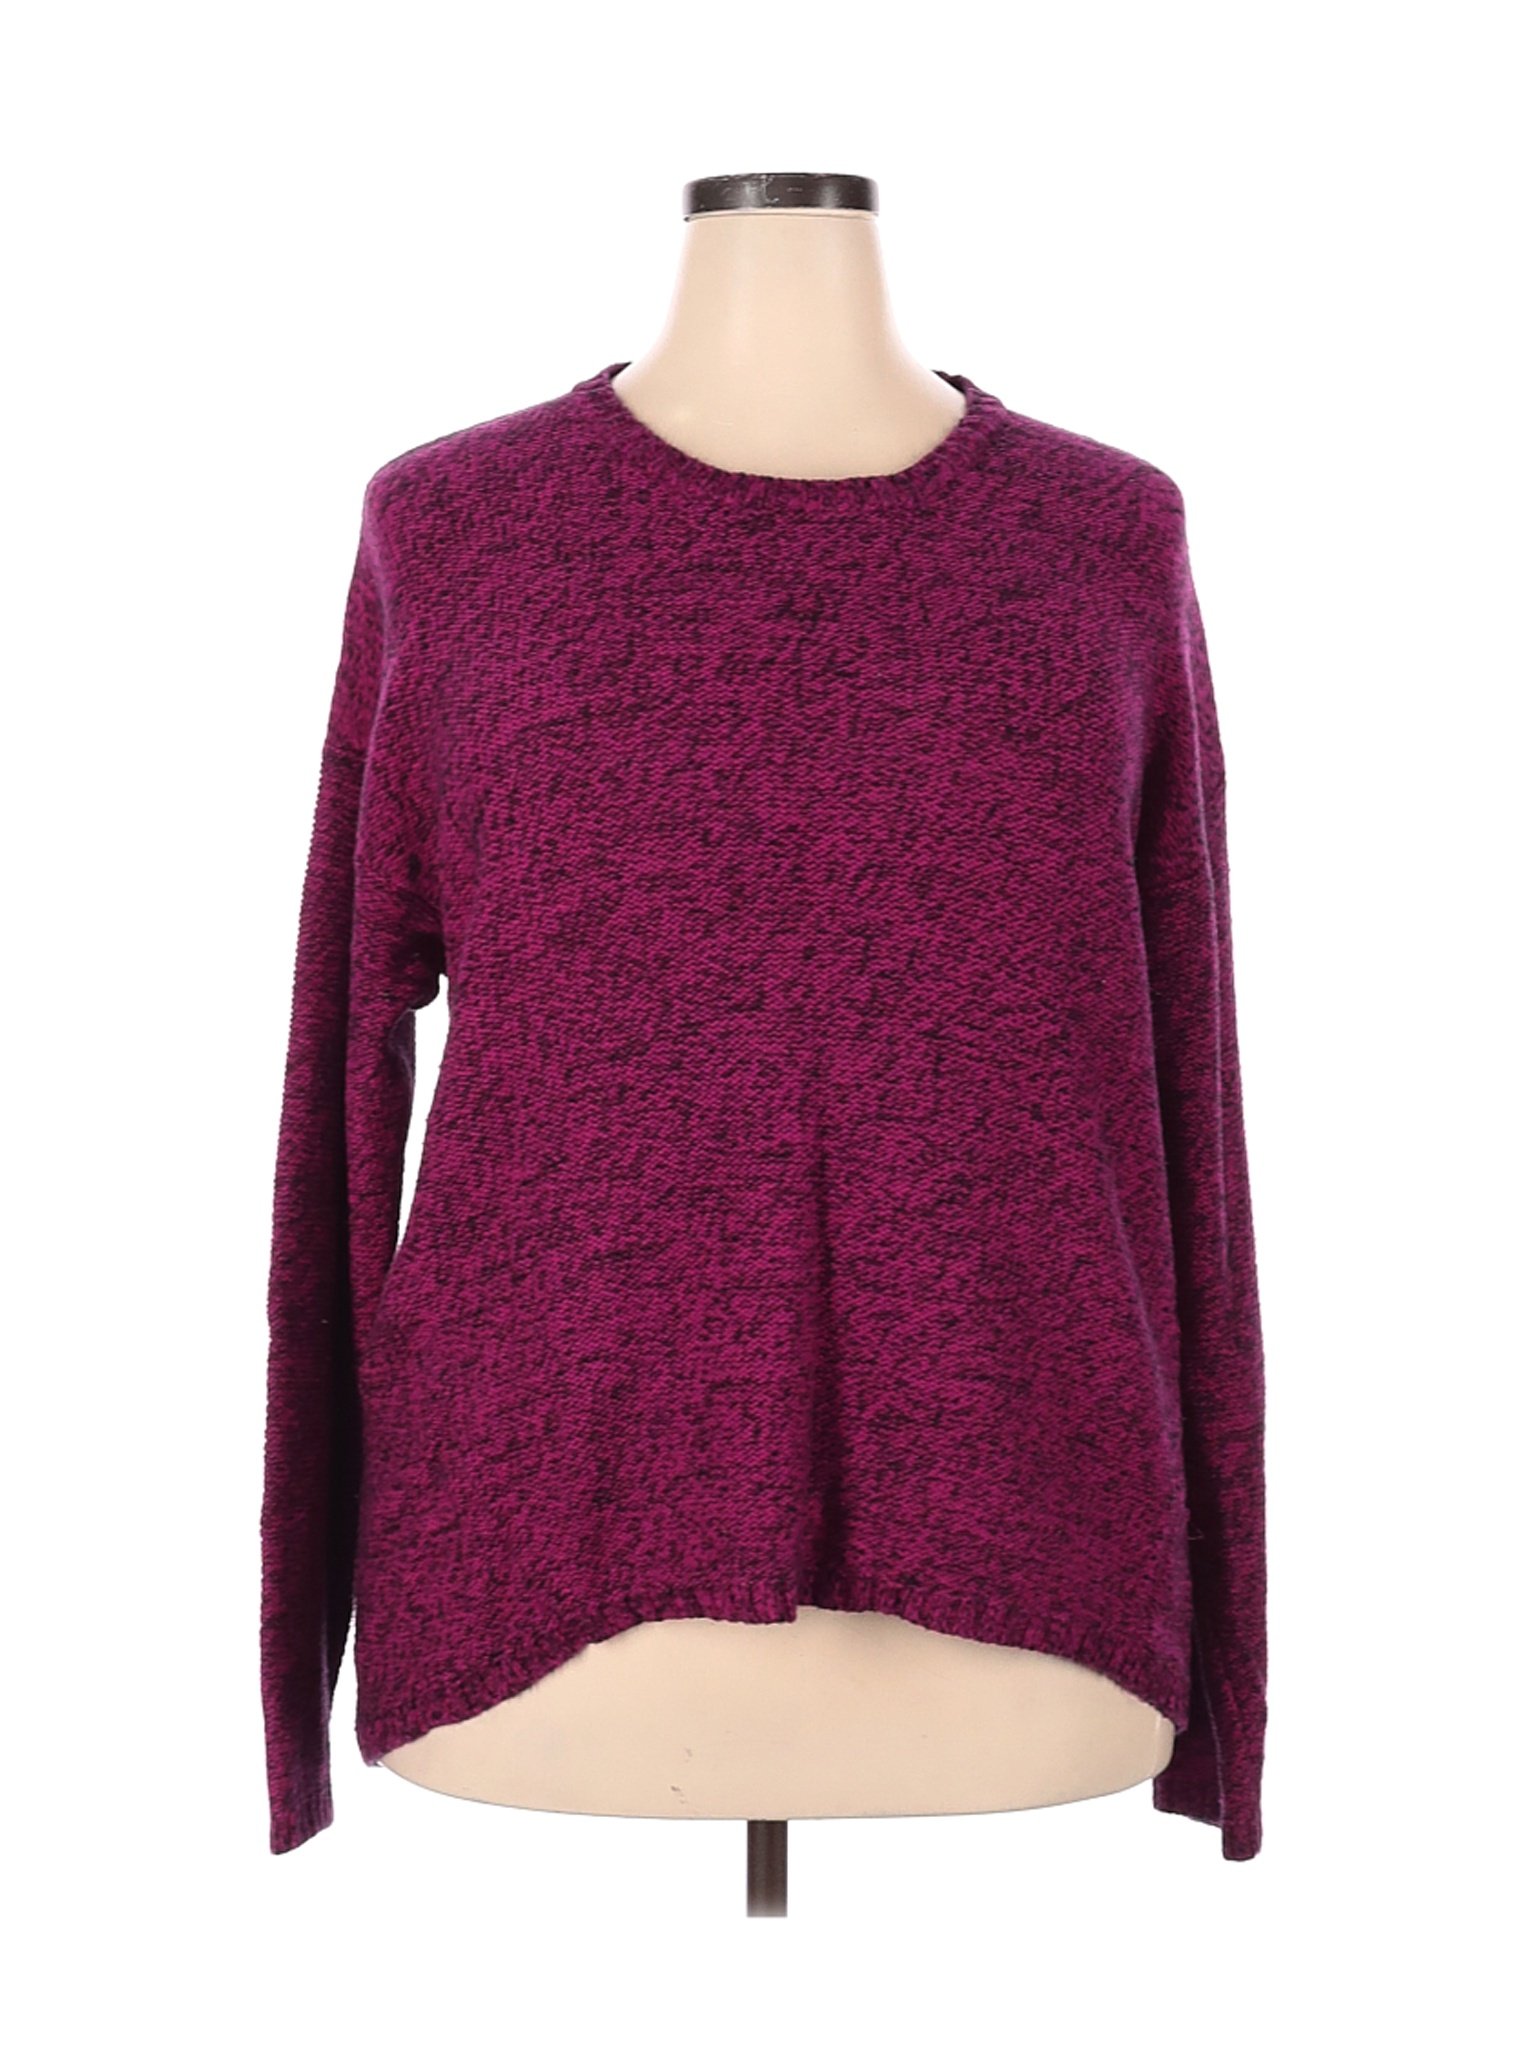 Philosophy Republic Clothing Women Purple Pullover Sweater XXL | eBay